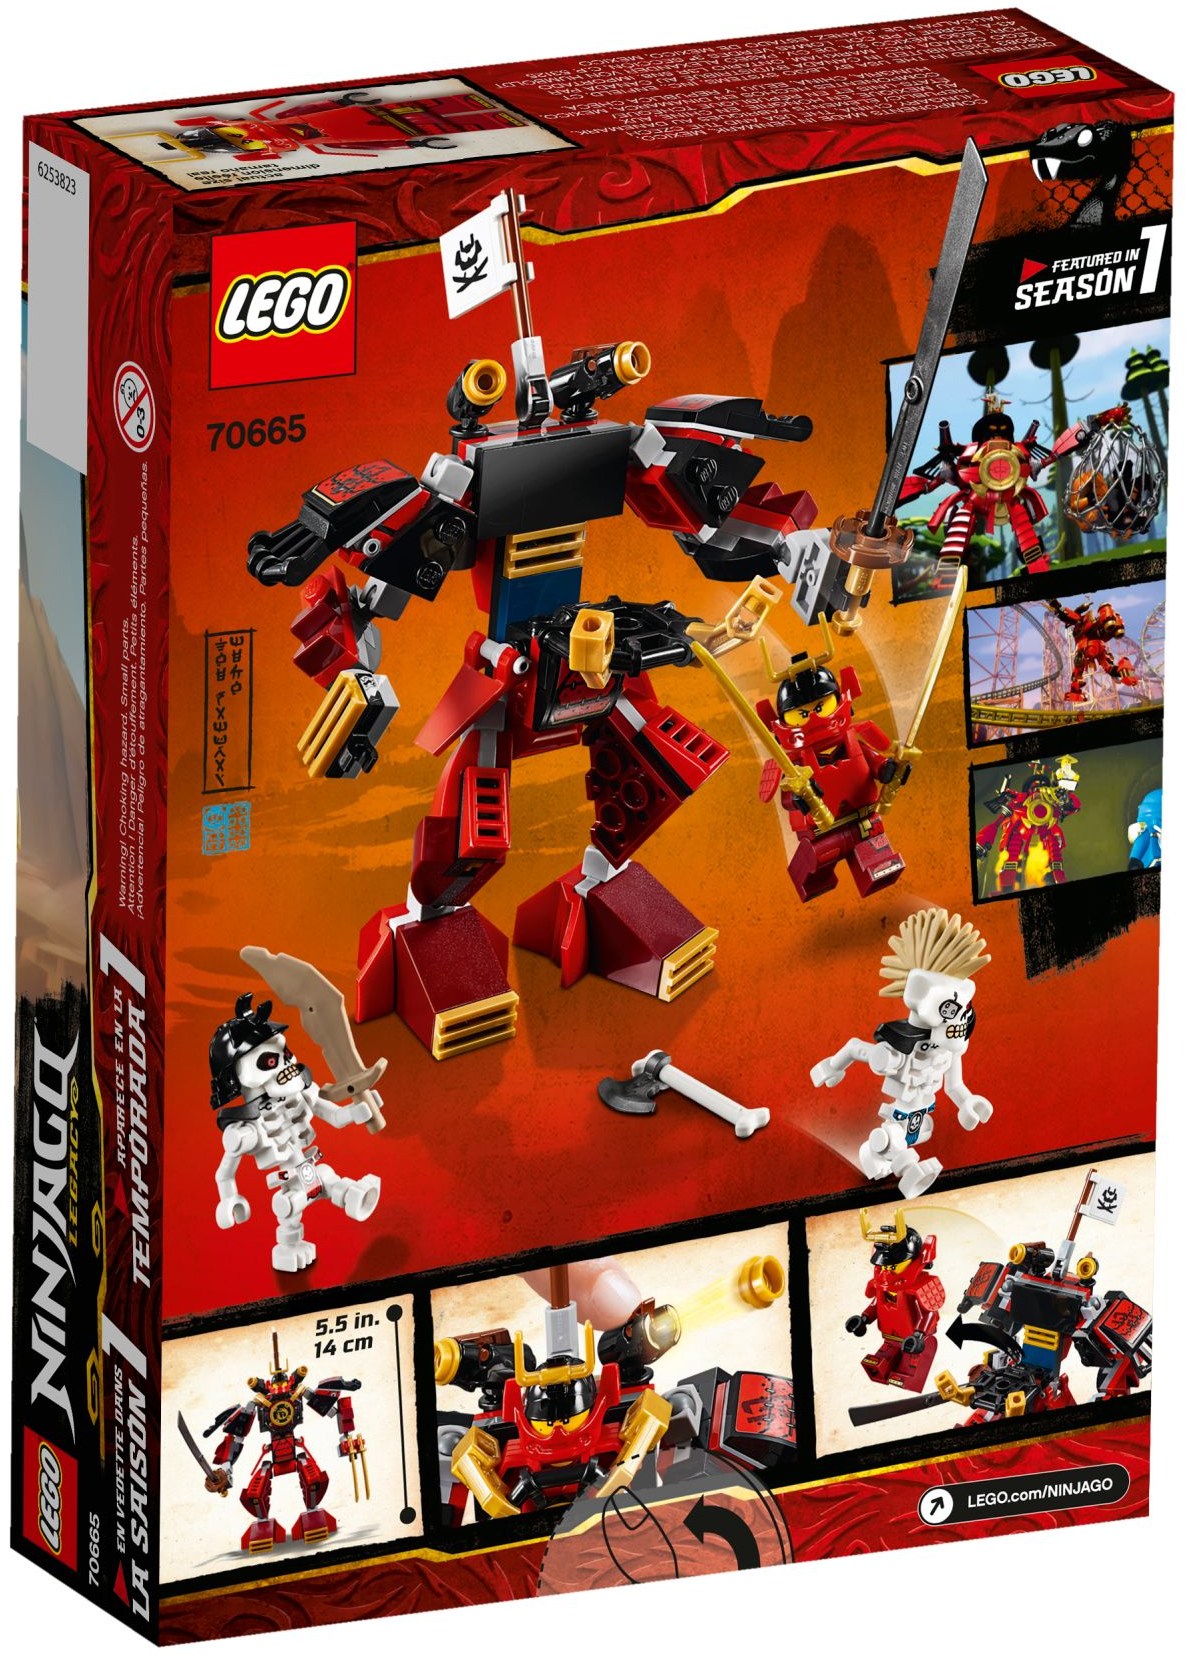 lego-70665-the-samurai-mech-lego-ninjago-set-for-sale-best-price